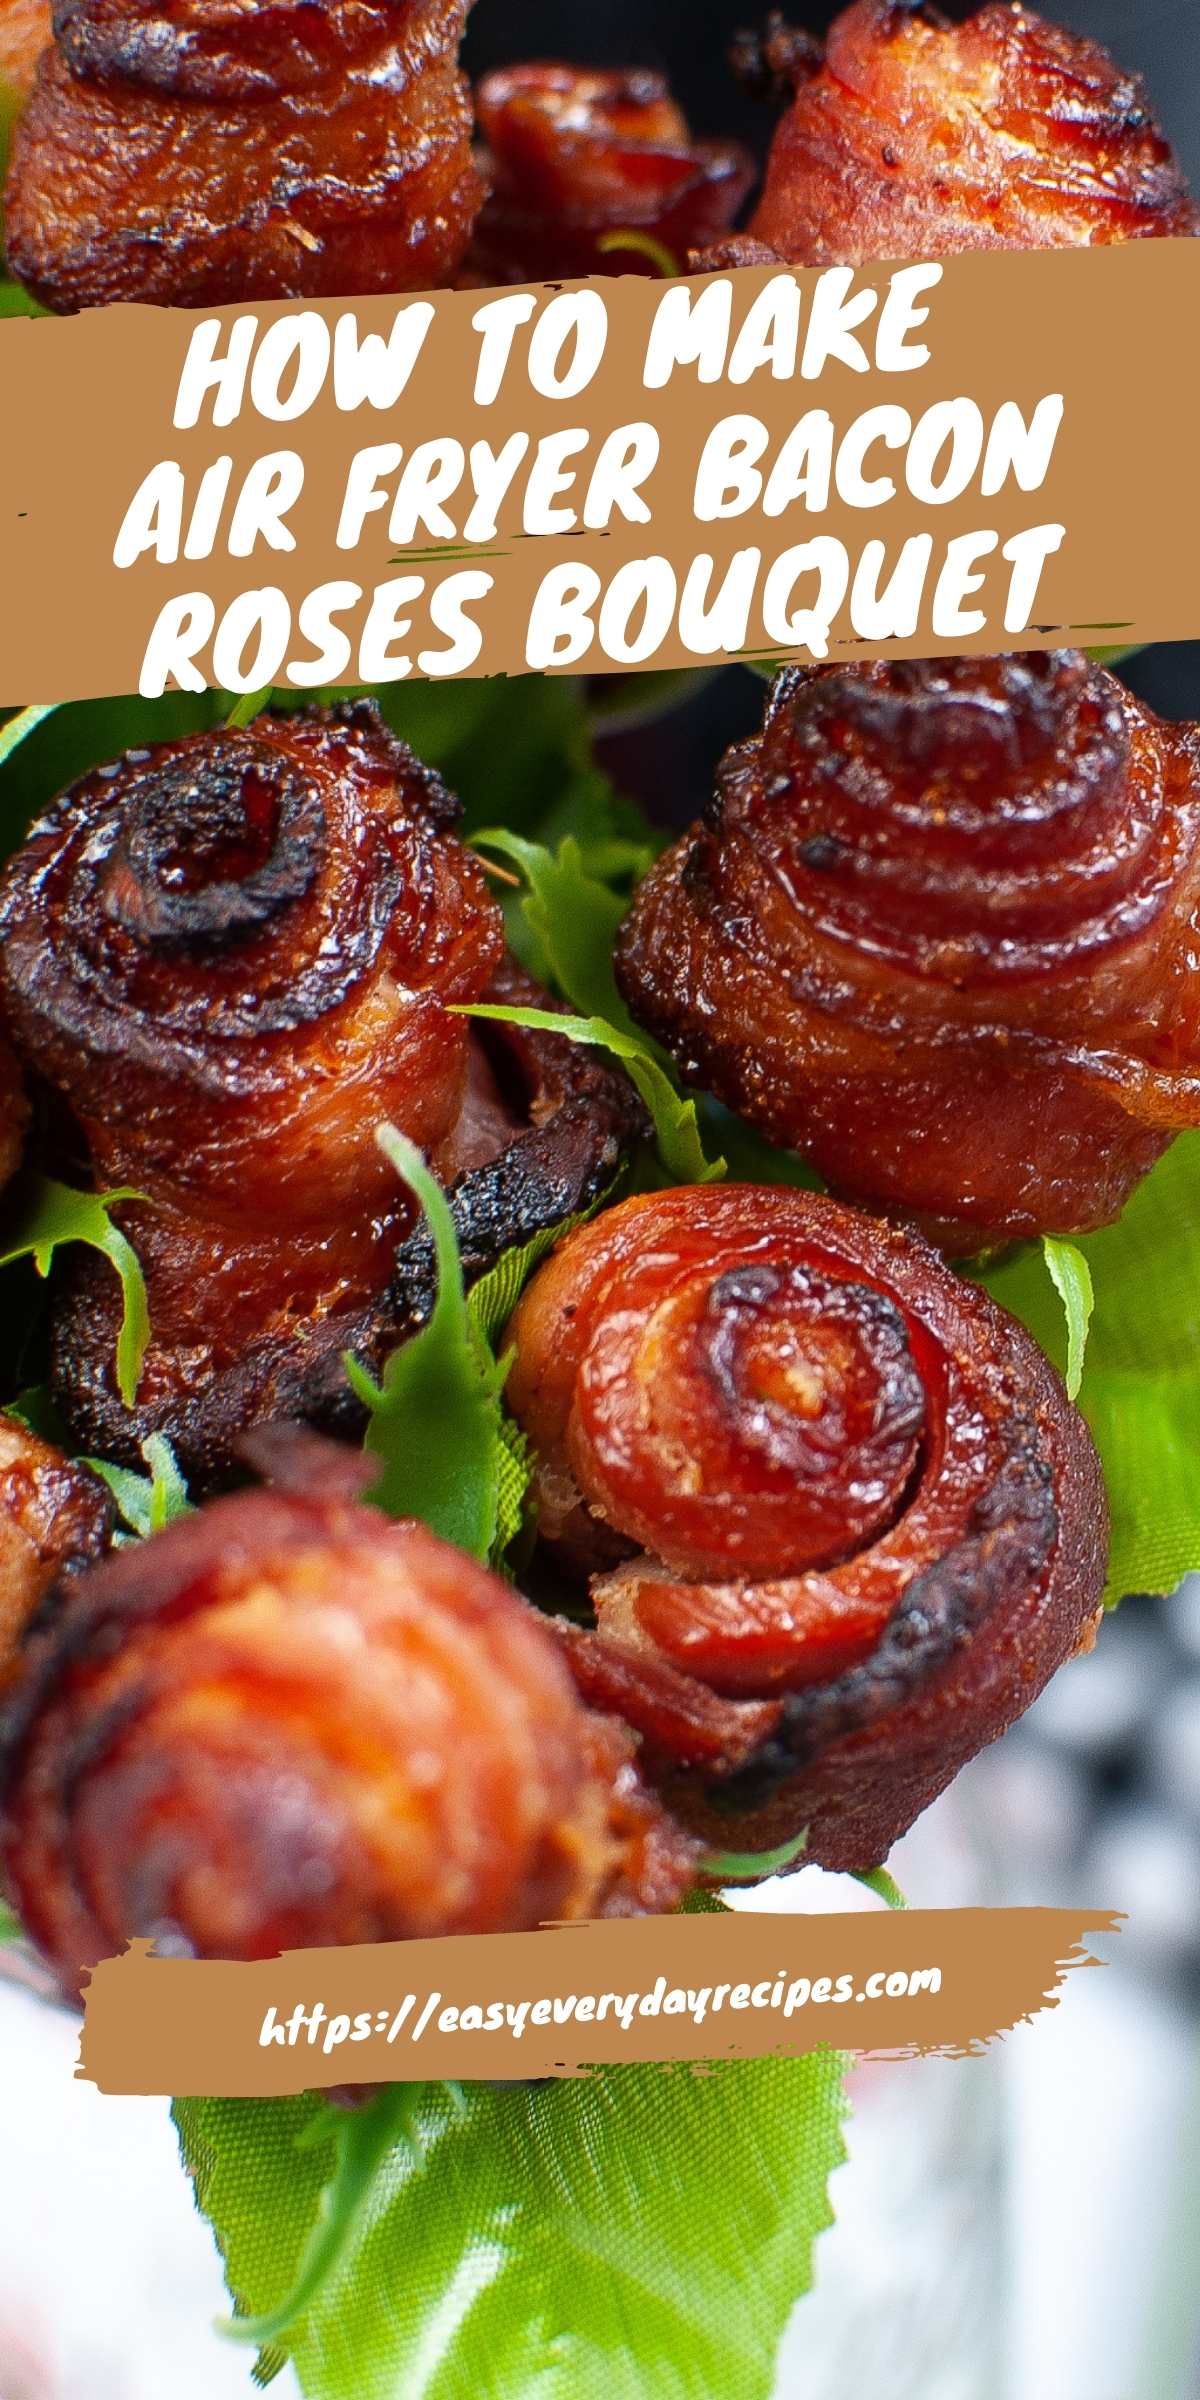 Air Fryer Bacon Roses bouquet